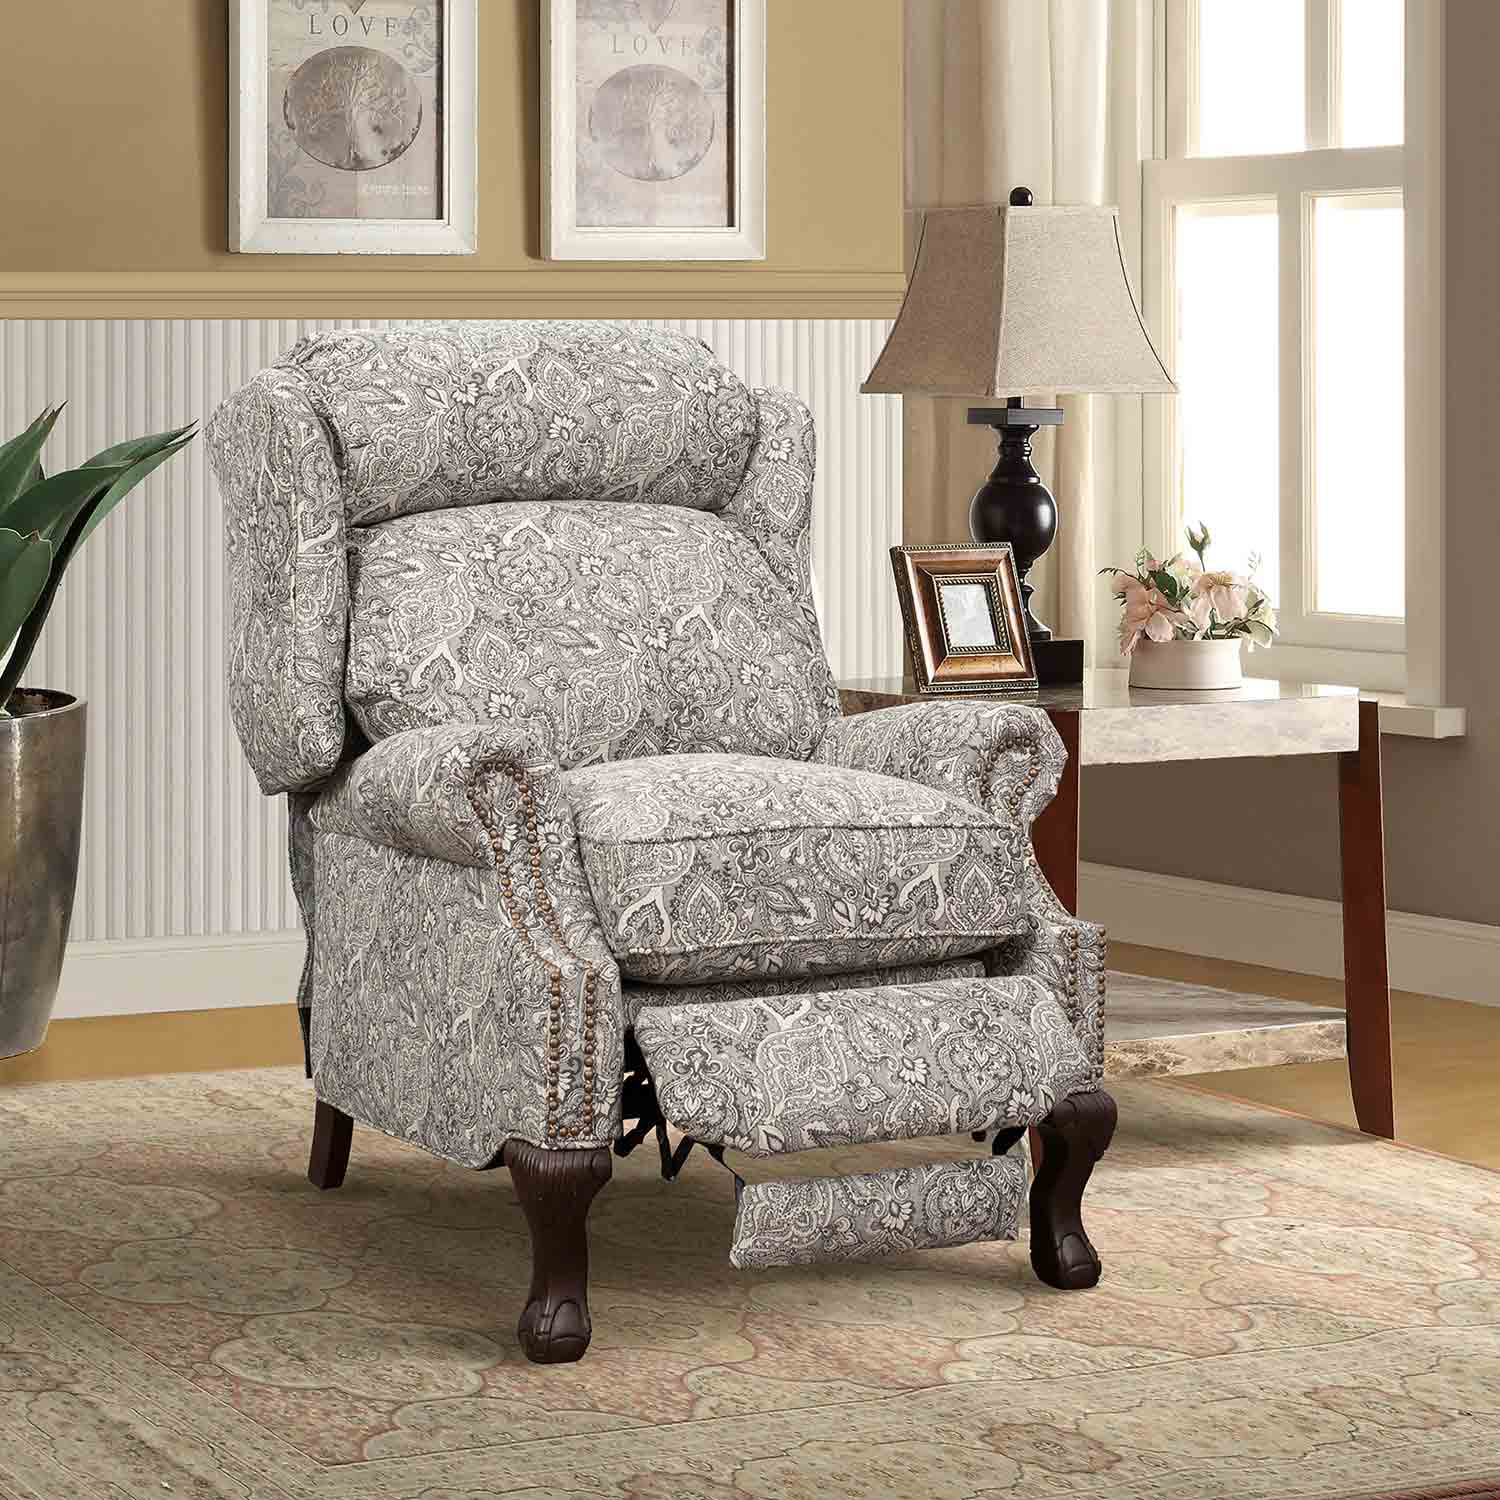 Barcalounger Danbury Recliner Chair - Rustic Cobblestone fabric